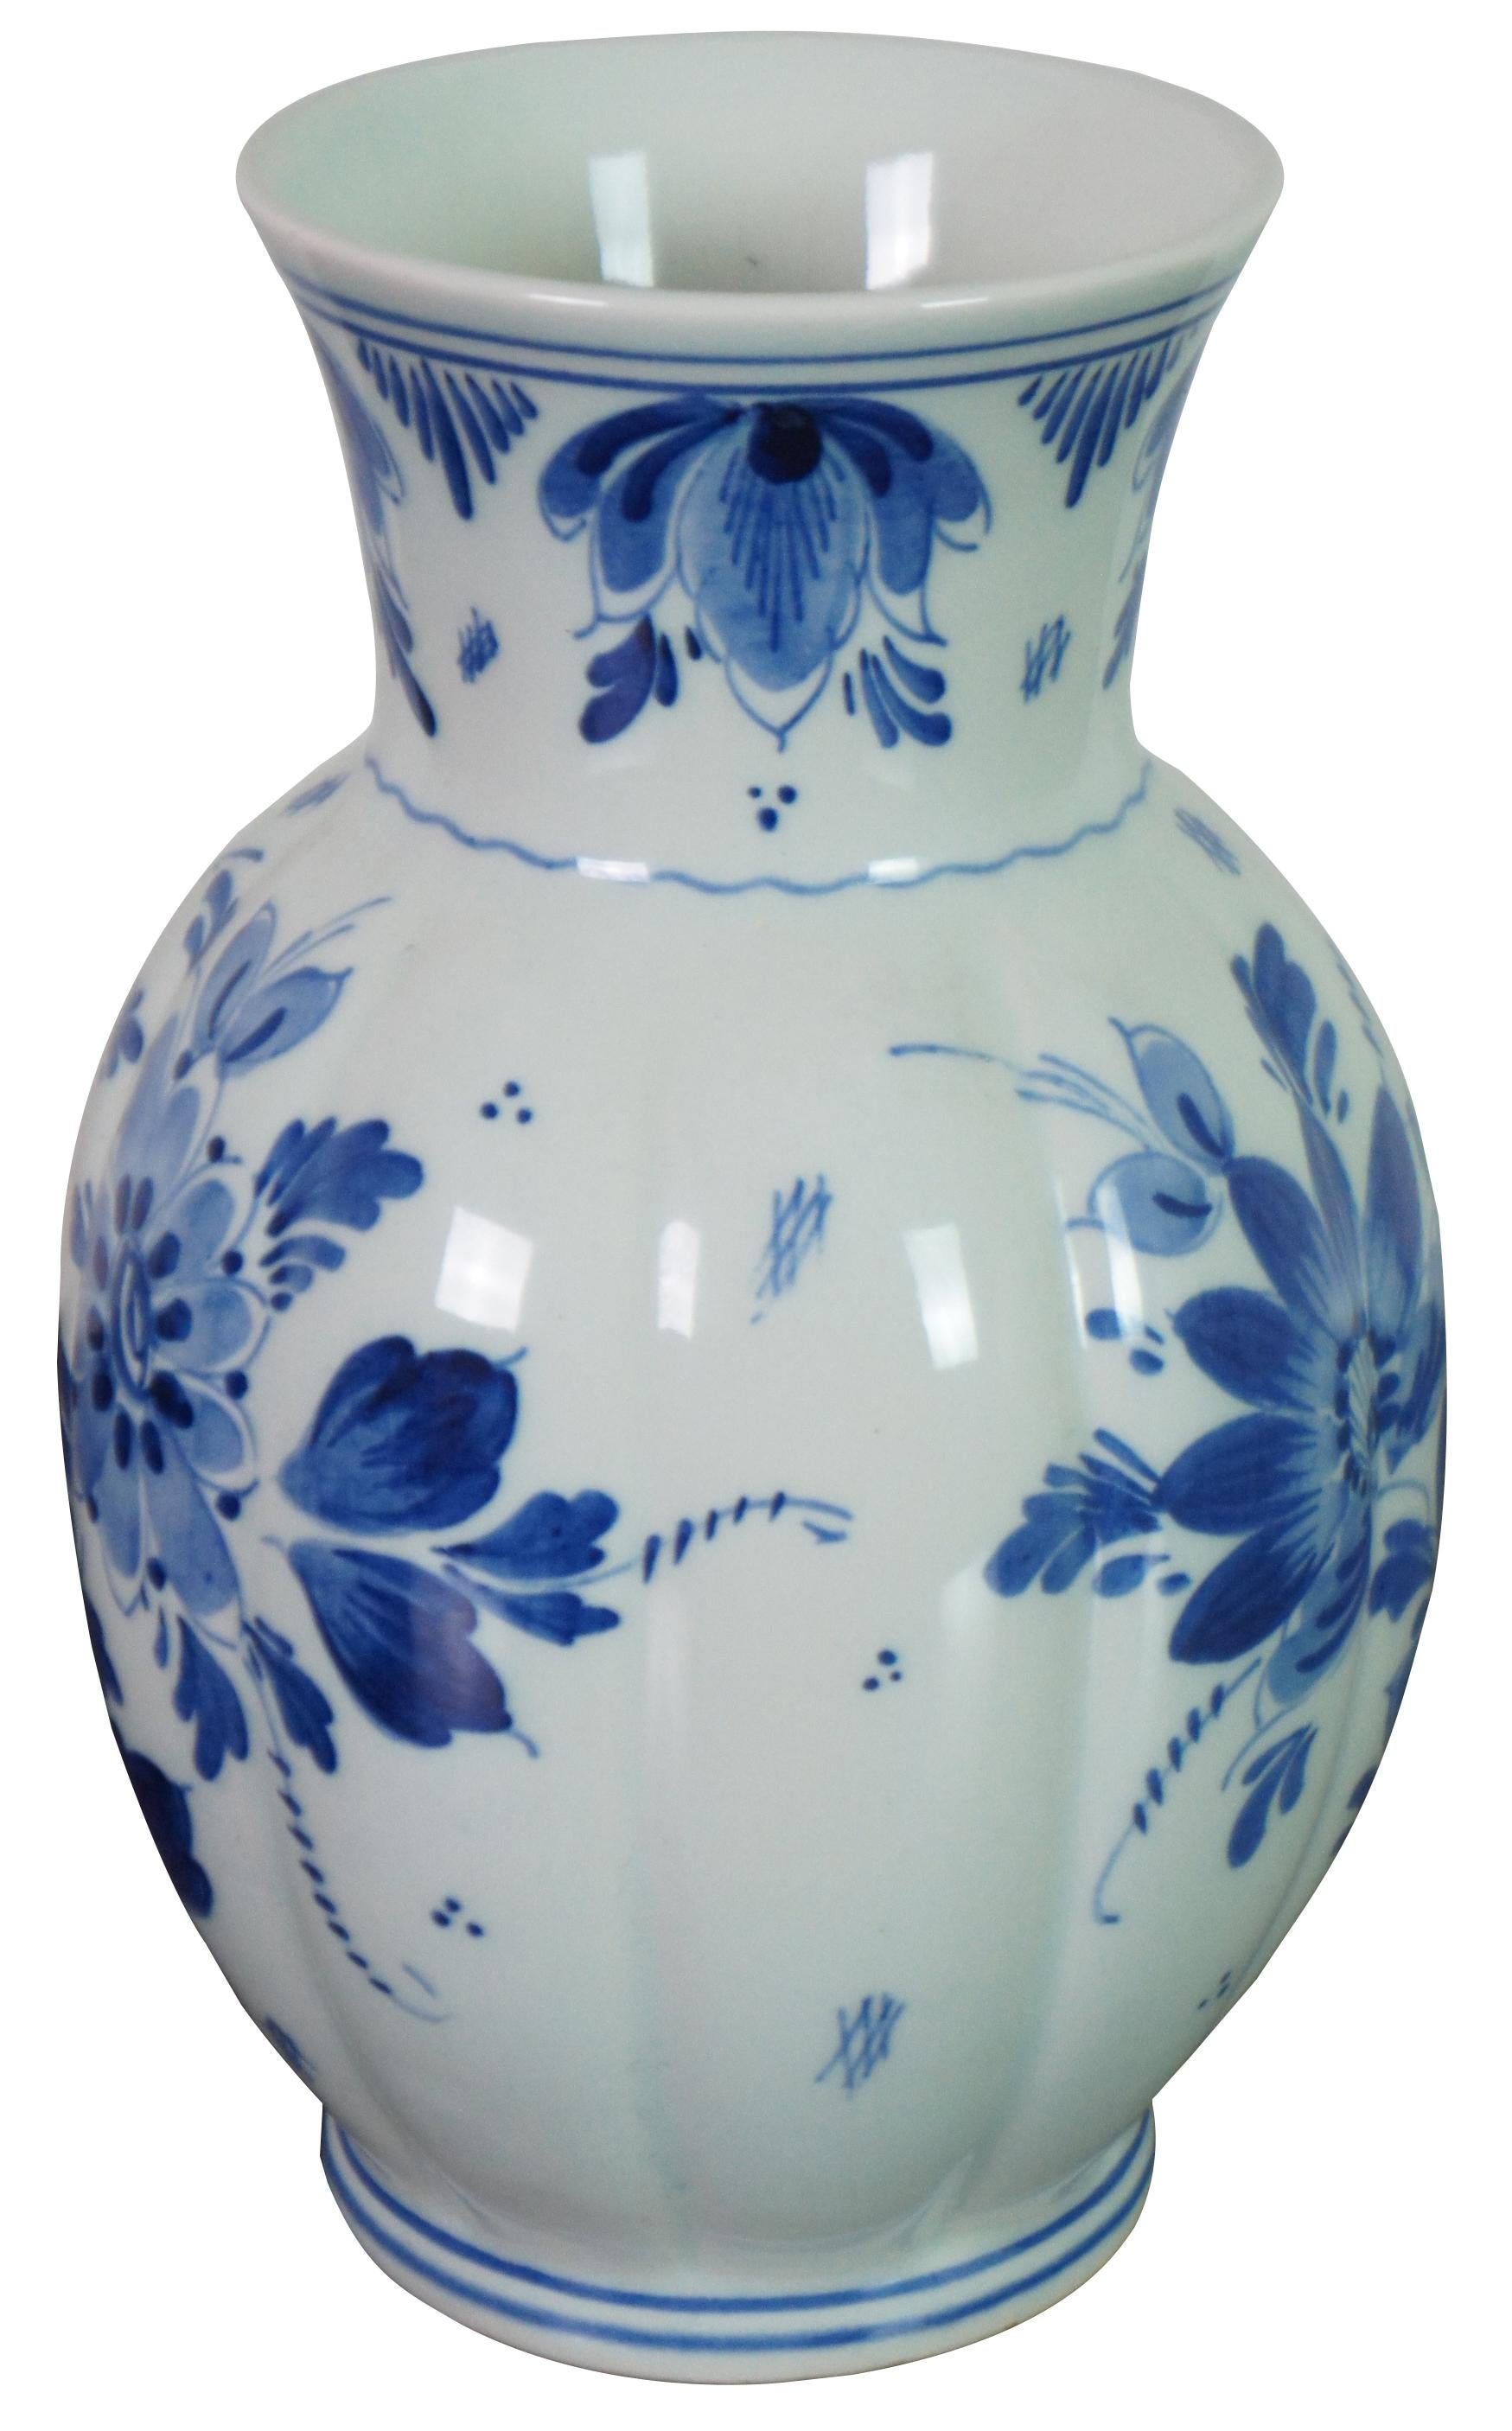 Vintage 1950s Delft Holland blue and white hand painted floral porcelain vase. Measures: 8